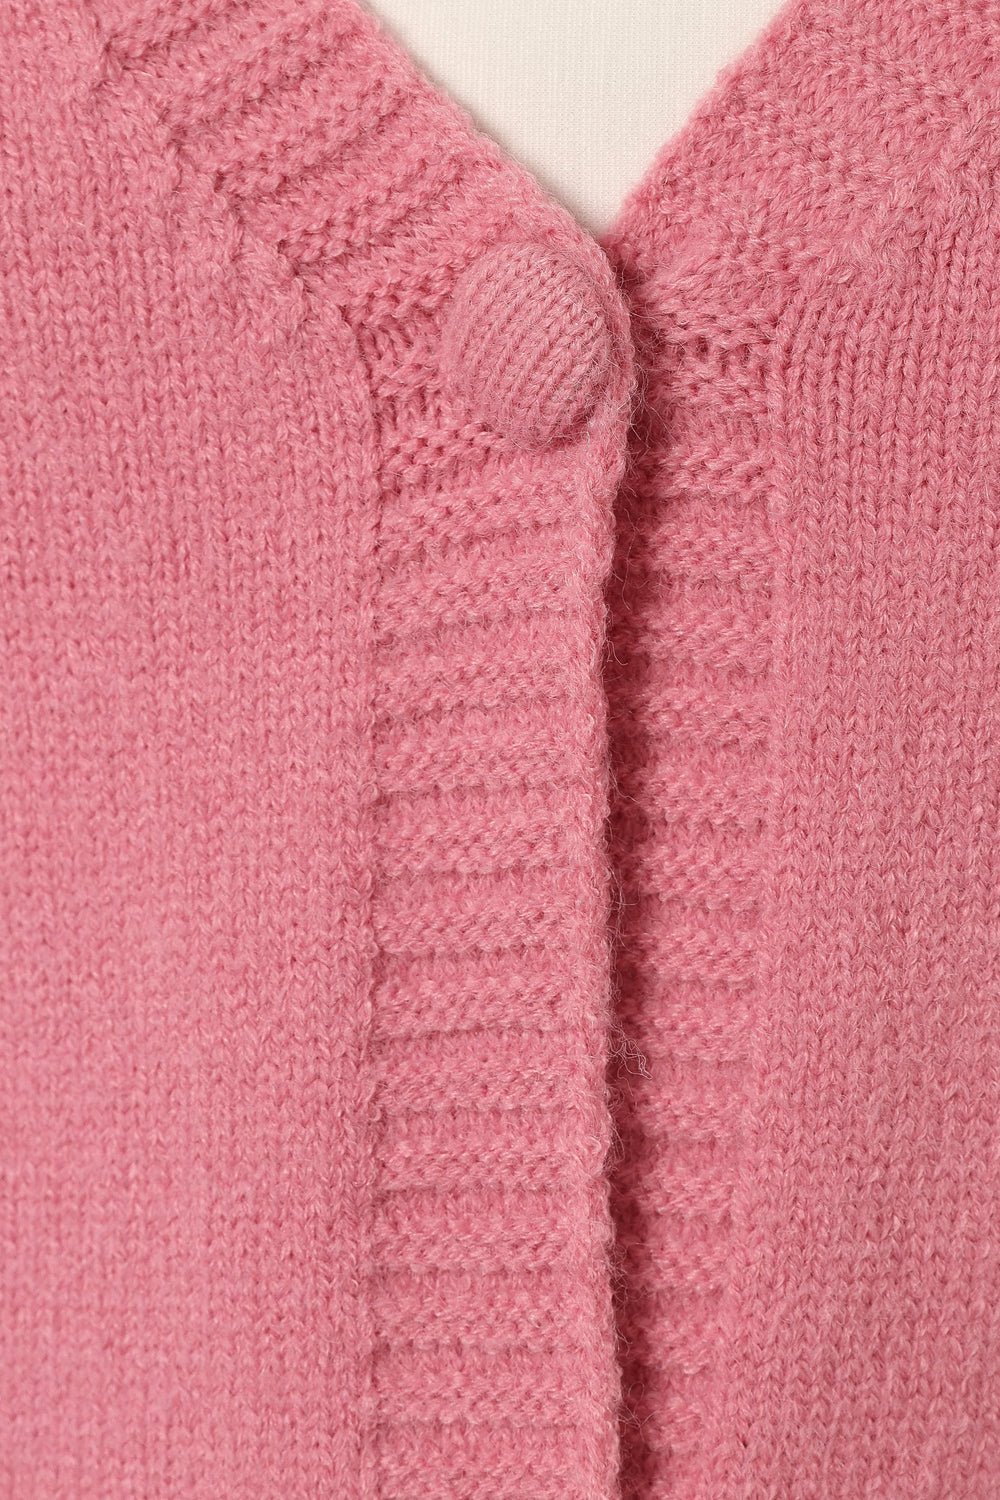 KNITWEAR @Xadie Bell Sleeve Cardigan - Pink (Hold for Cool Beginnings)